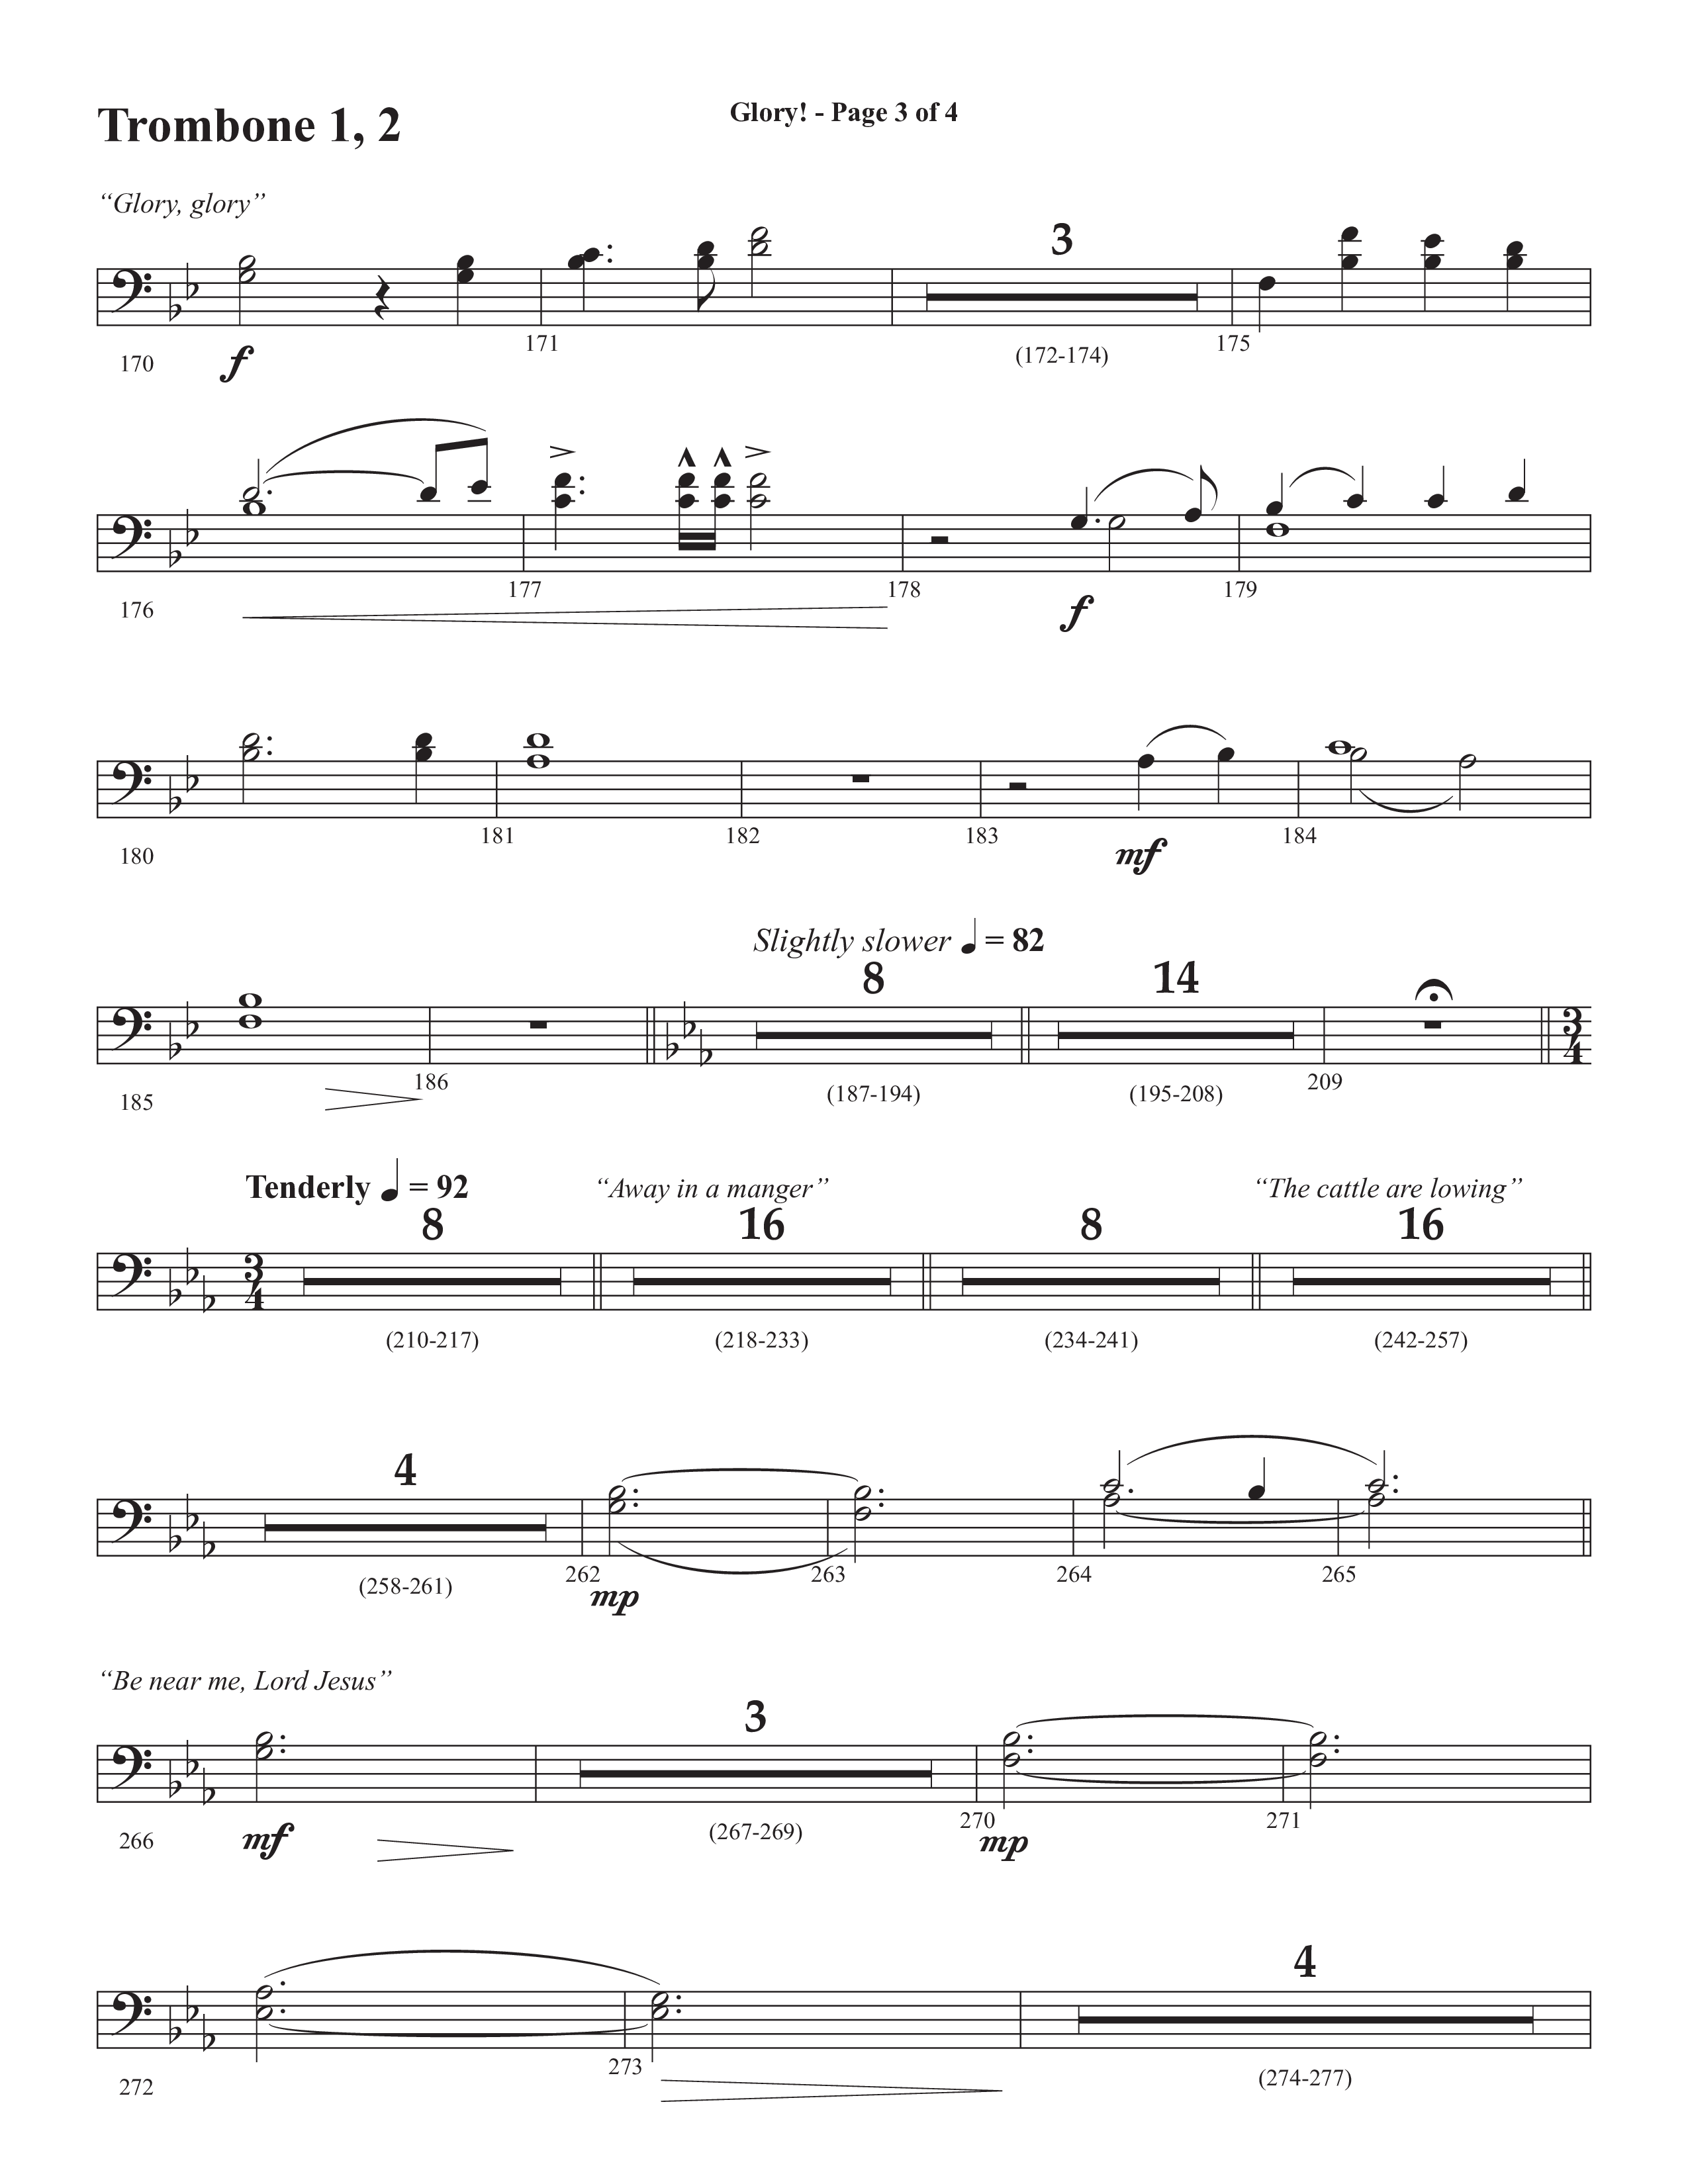 Glory: A Christmas Worship Experience (Choral Anthem SATB) Trombone 1/2 (Semsen Music / Arr. John Bolin / Orch. Cliff Duren)